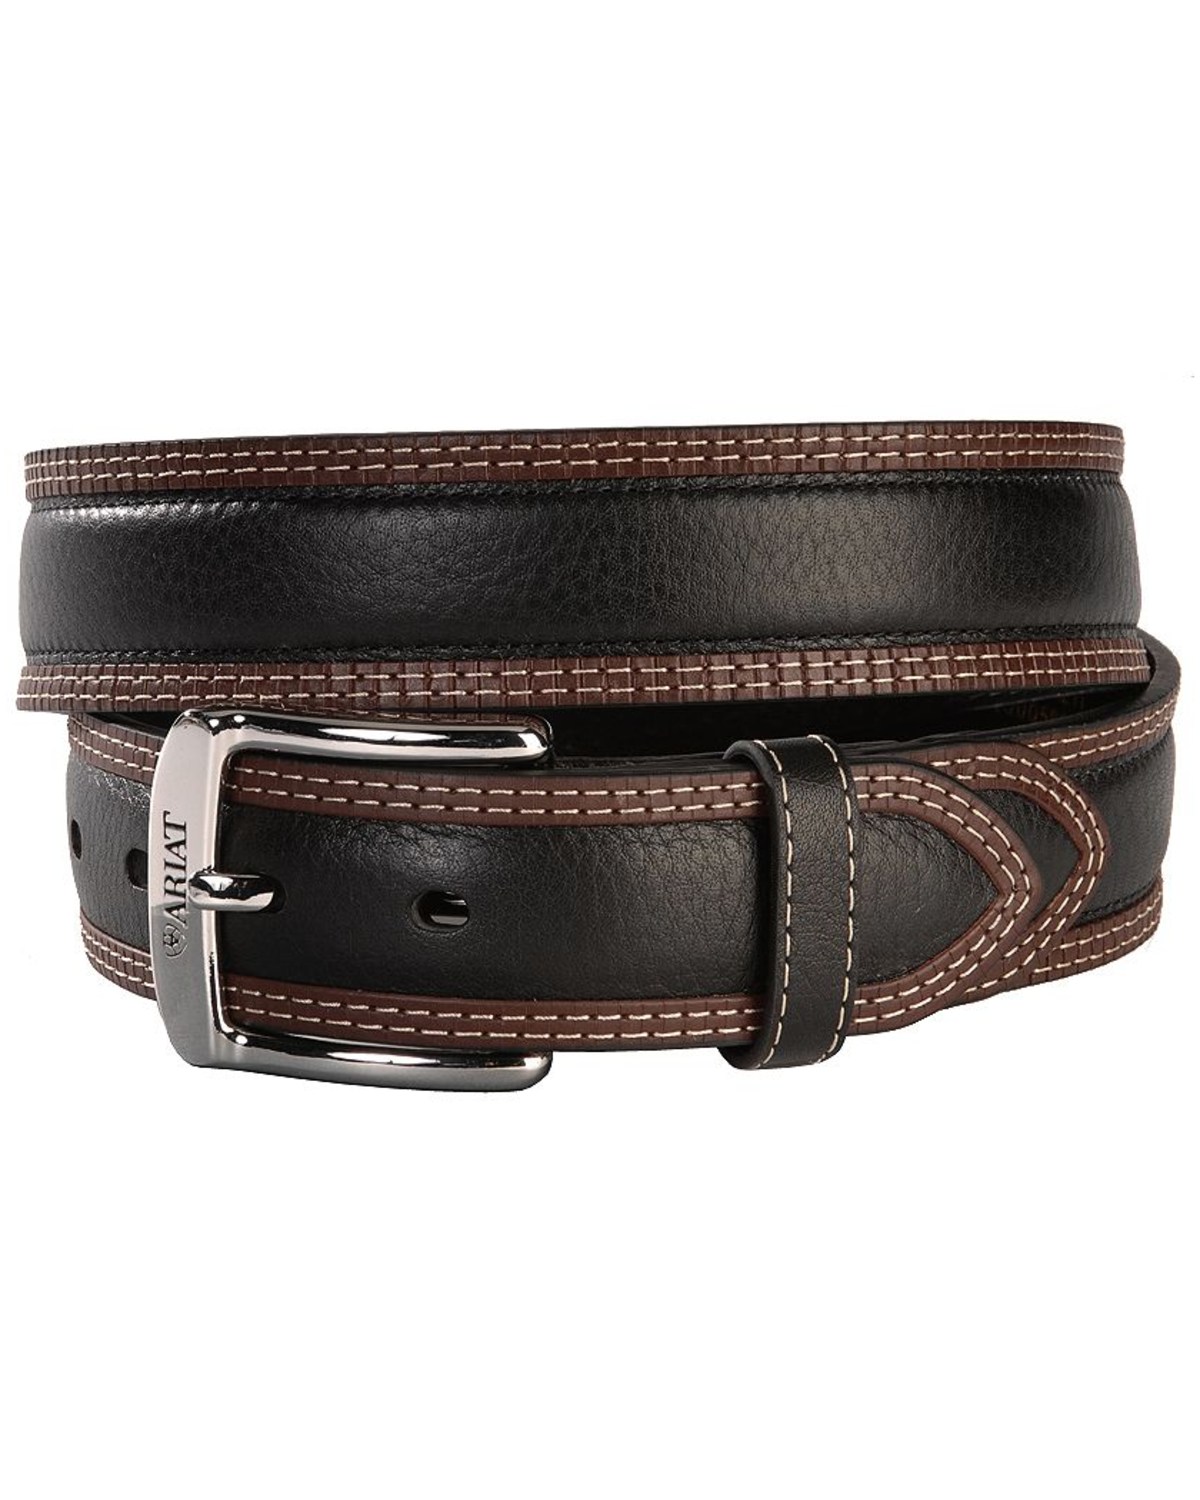 Ariat Men's Diesel Leather Belt